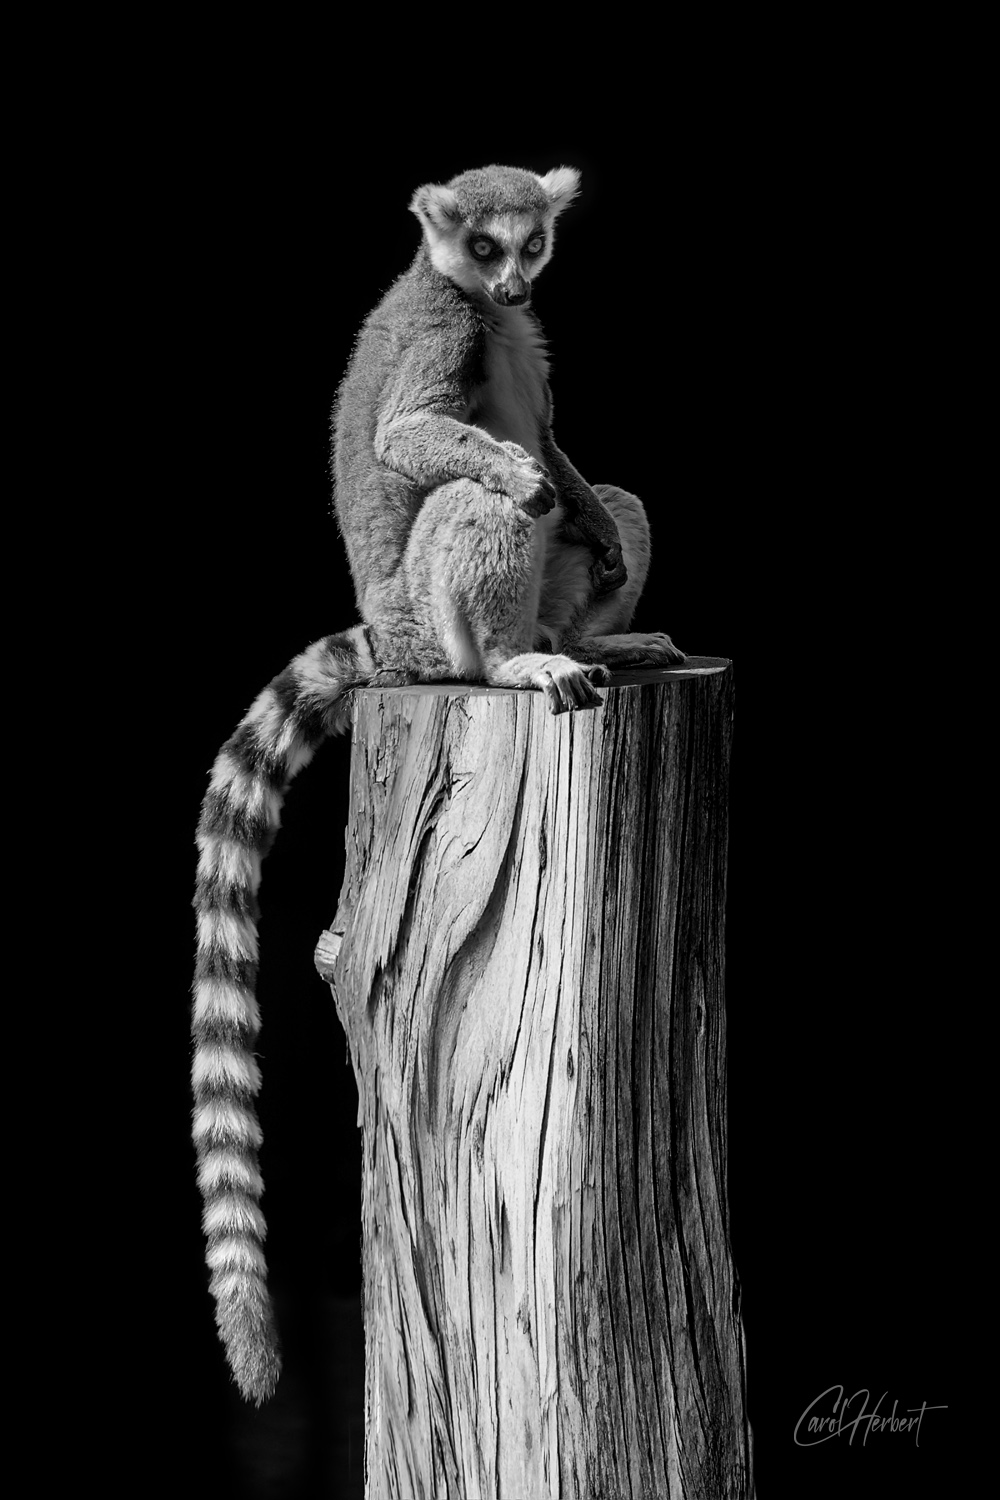 Photograph of a Lemur sitting on a tree stump